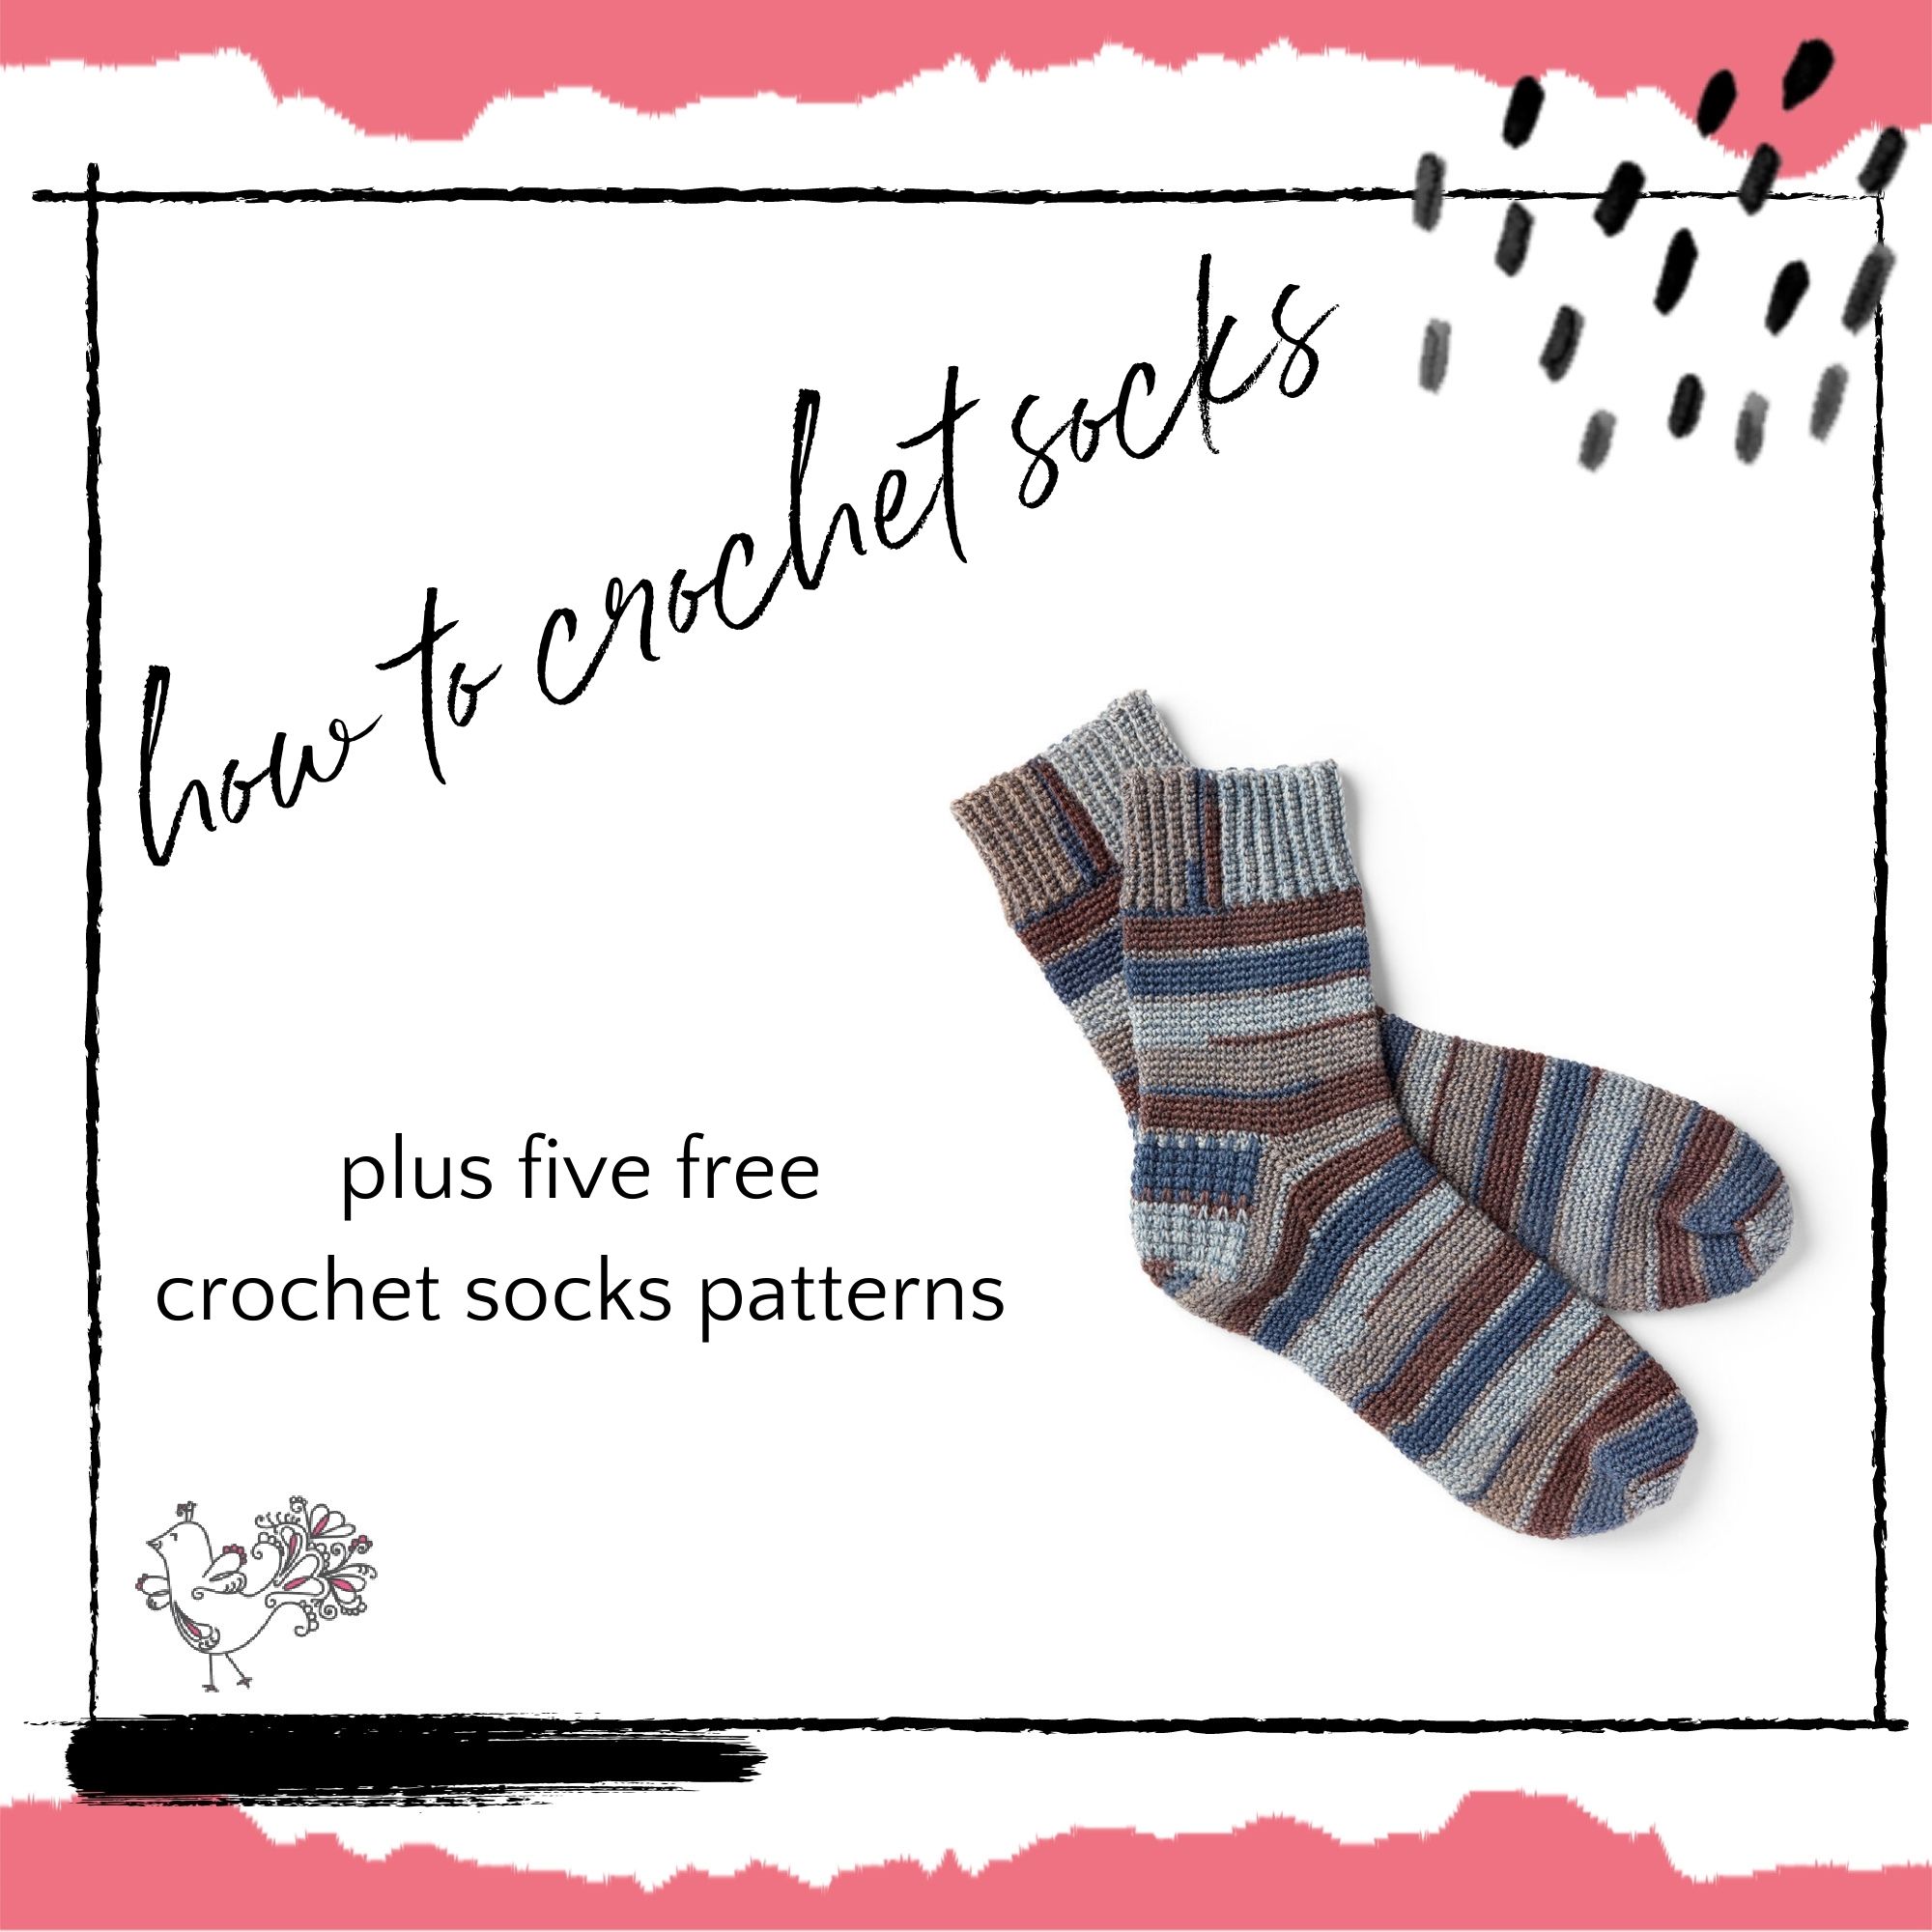 https://marlybird.com/wp-content/uploads/2018/01/how-to-crochet-socks.jpg